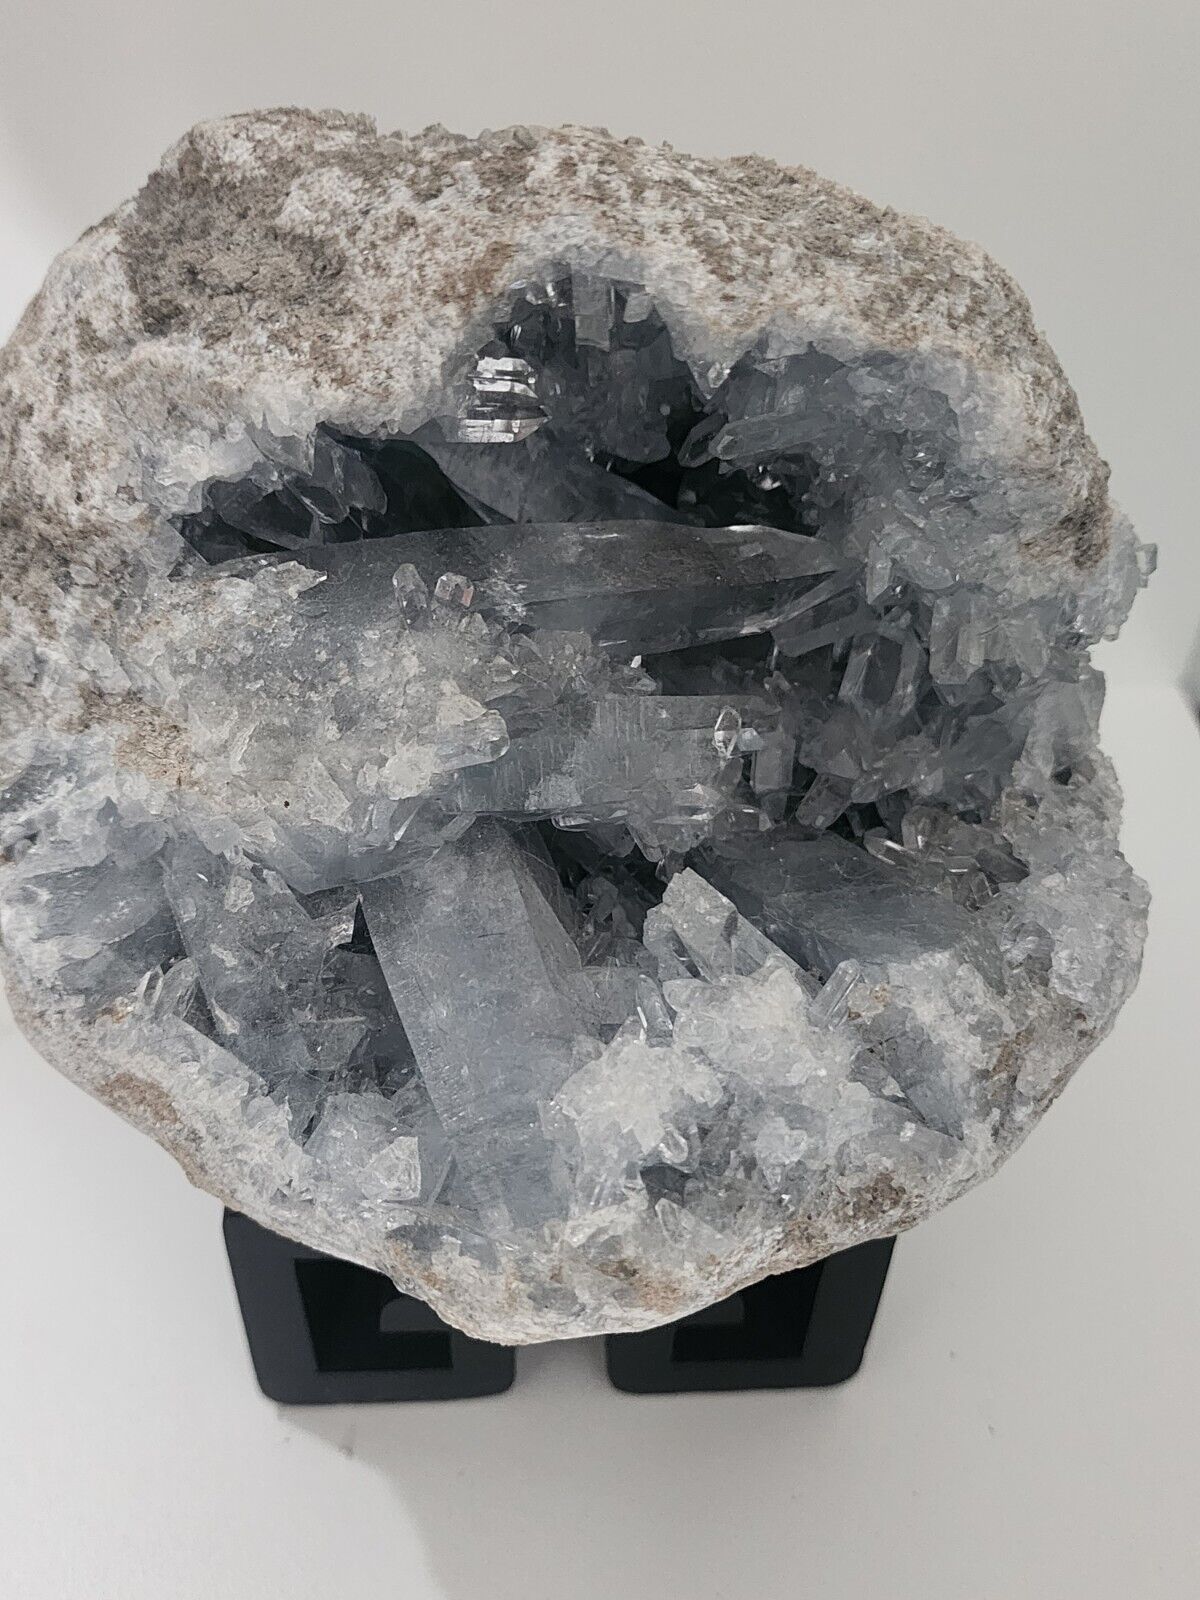 Celestite Geode Quartz Crystal Mineral Specimen. RARE LARGE TERMINATED CRYSTALS